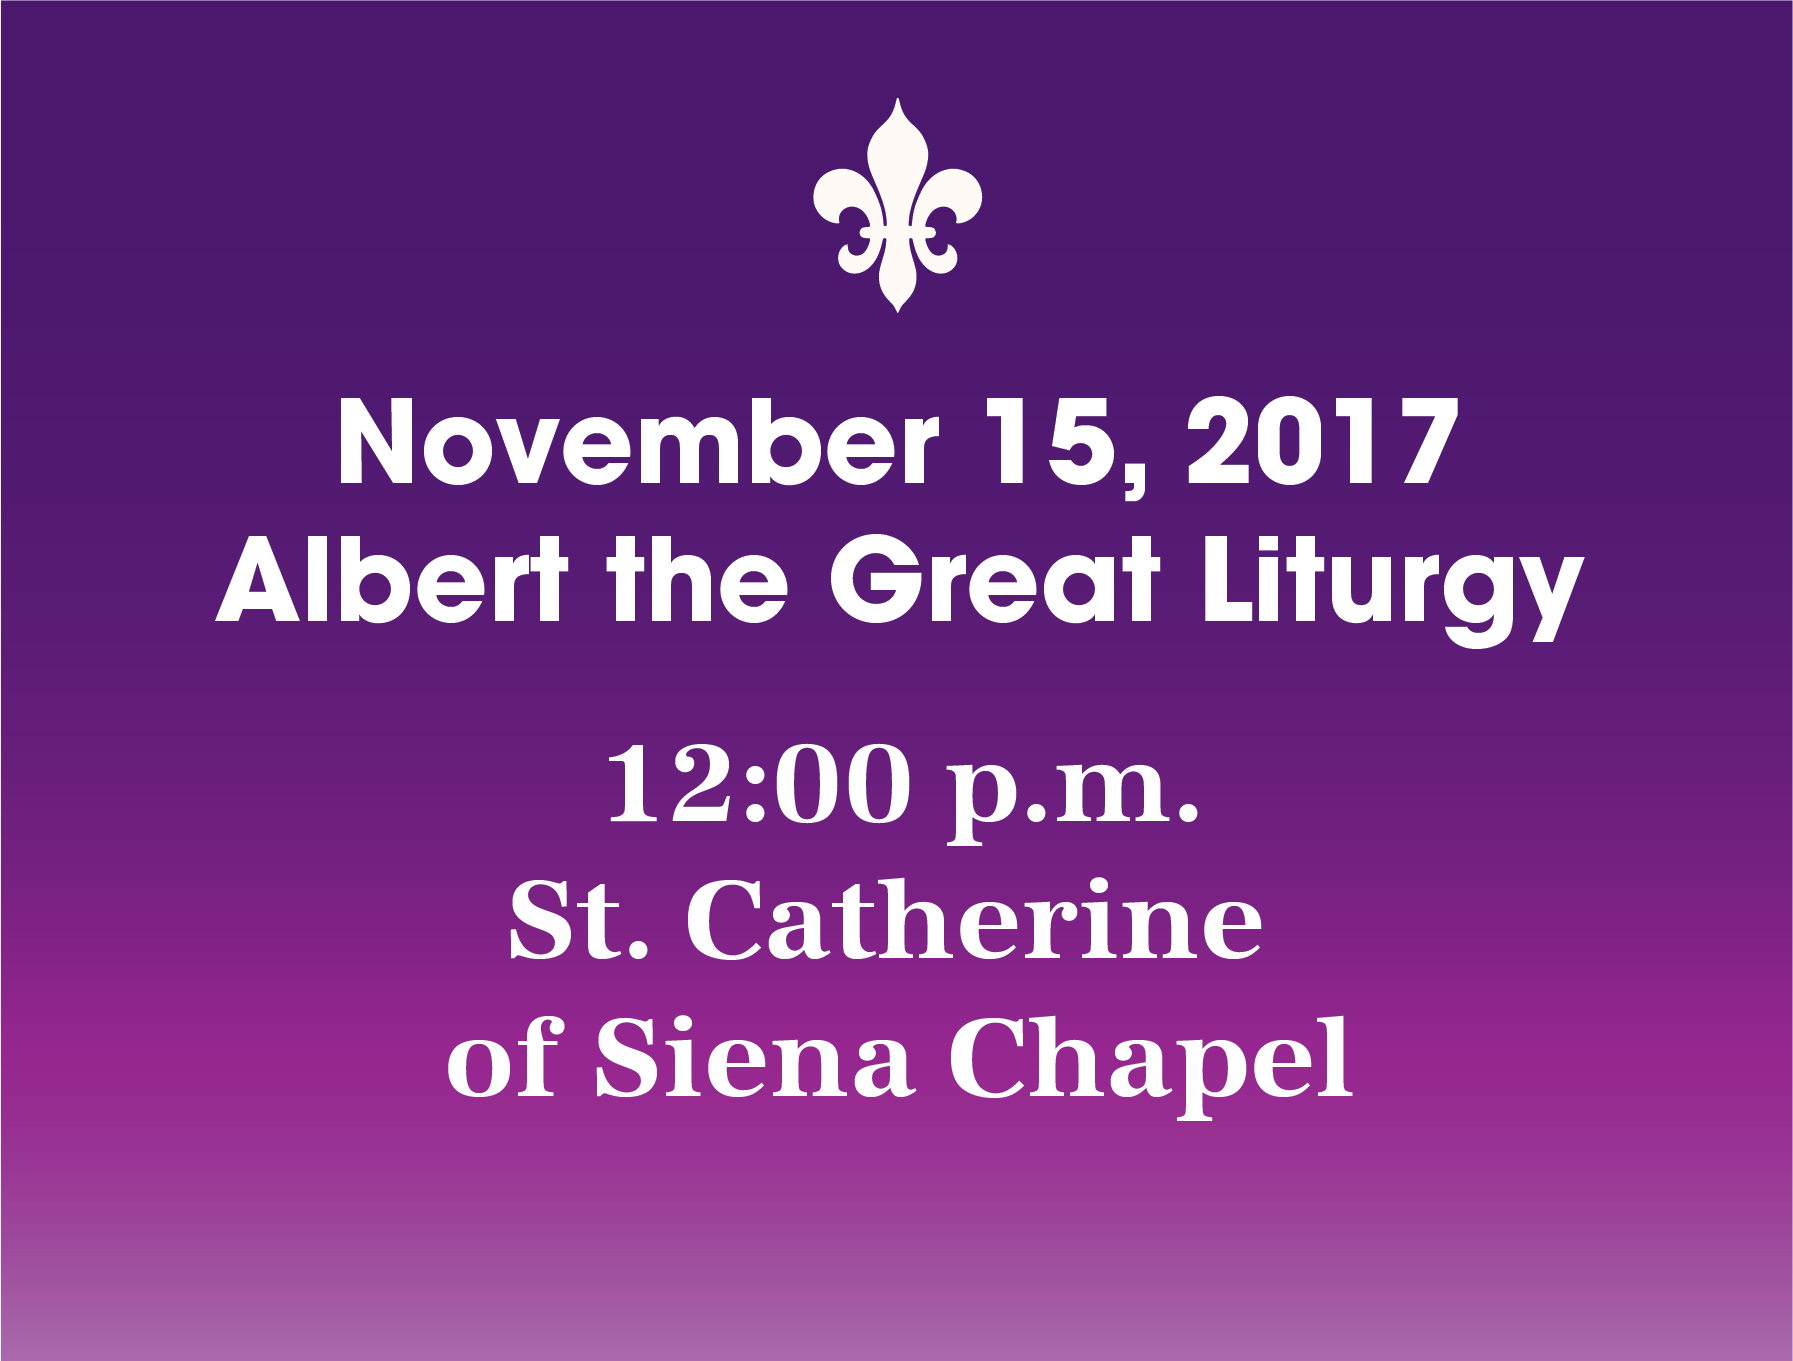 Albert the Great Liturgy